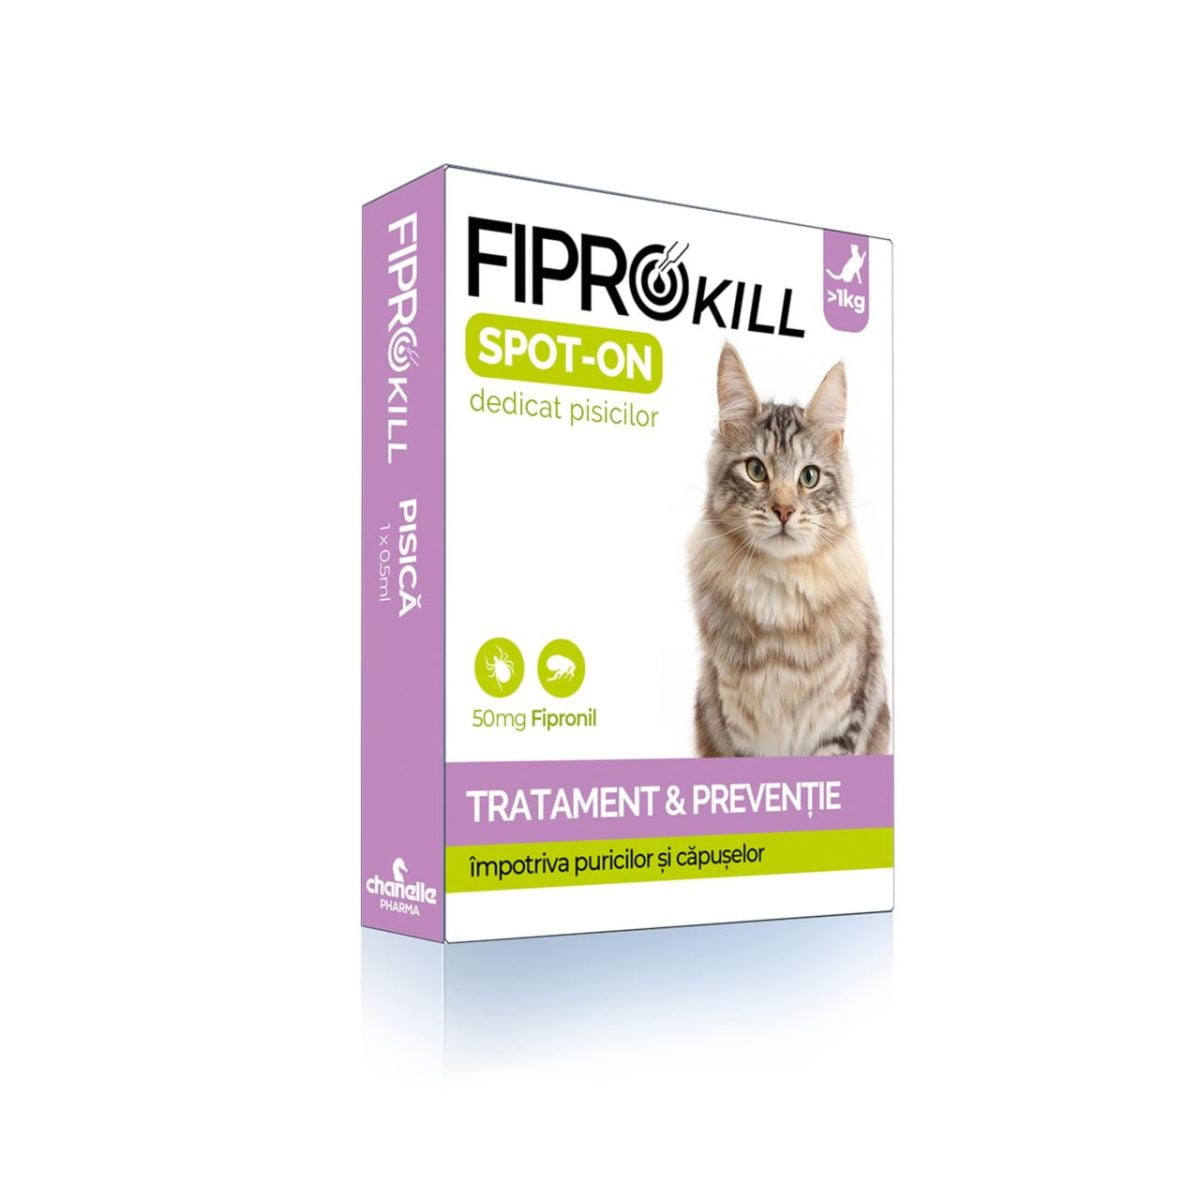 Antiparazitar extern pentru pisica fiprokill cat 50 mg spot-on 3pip/cut